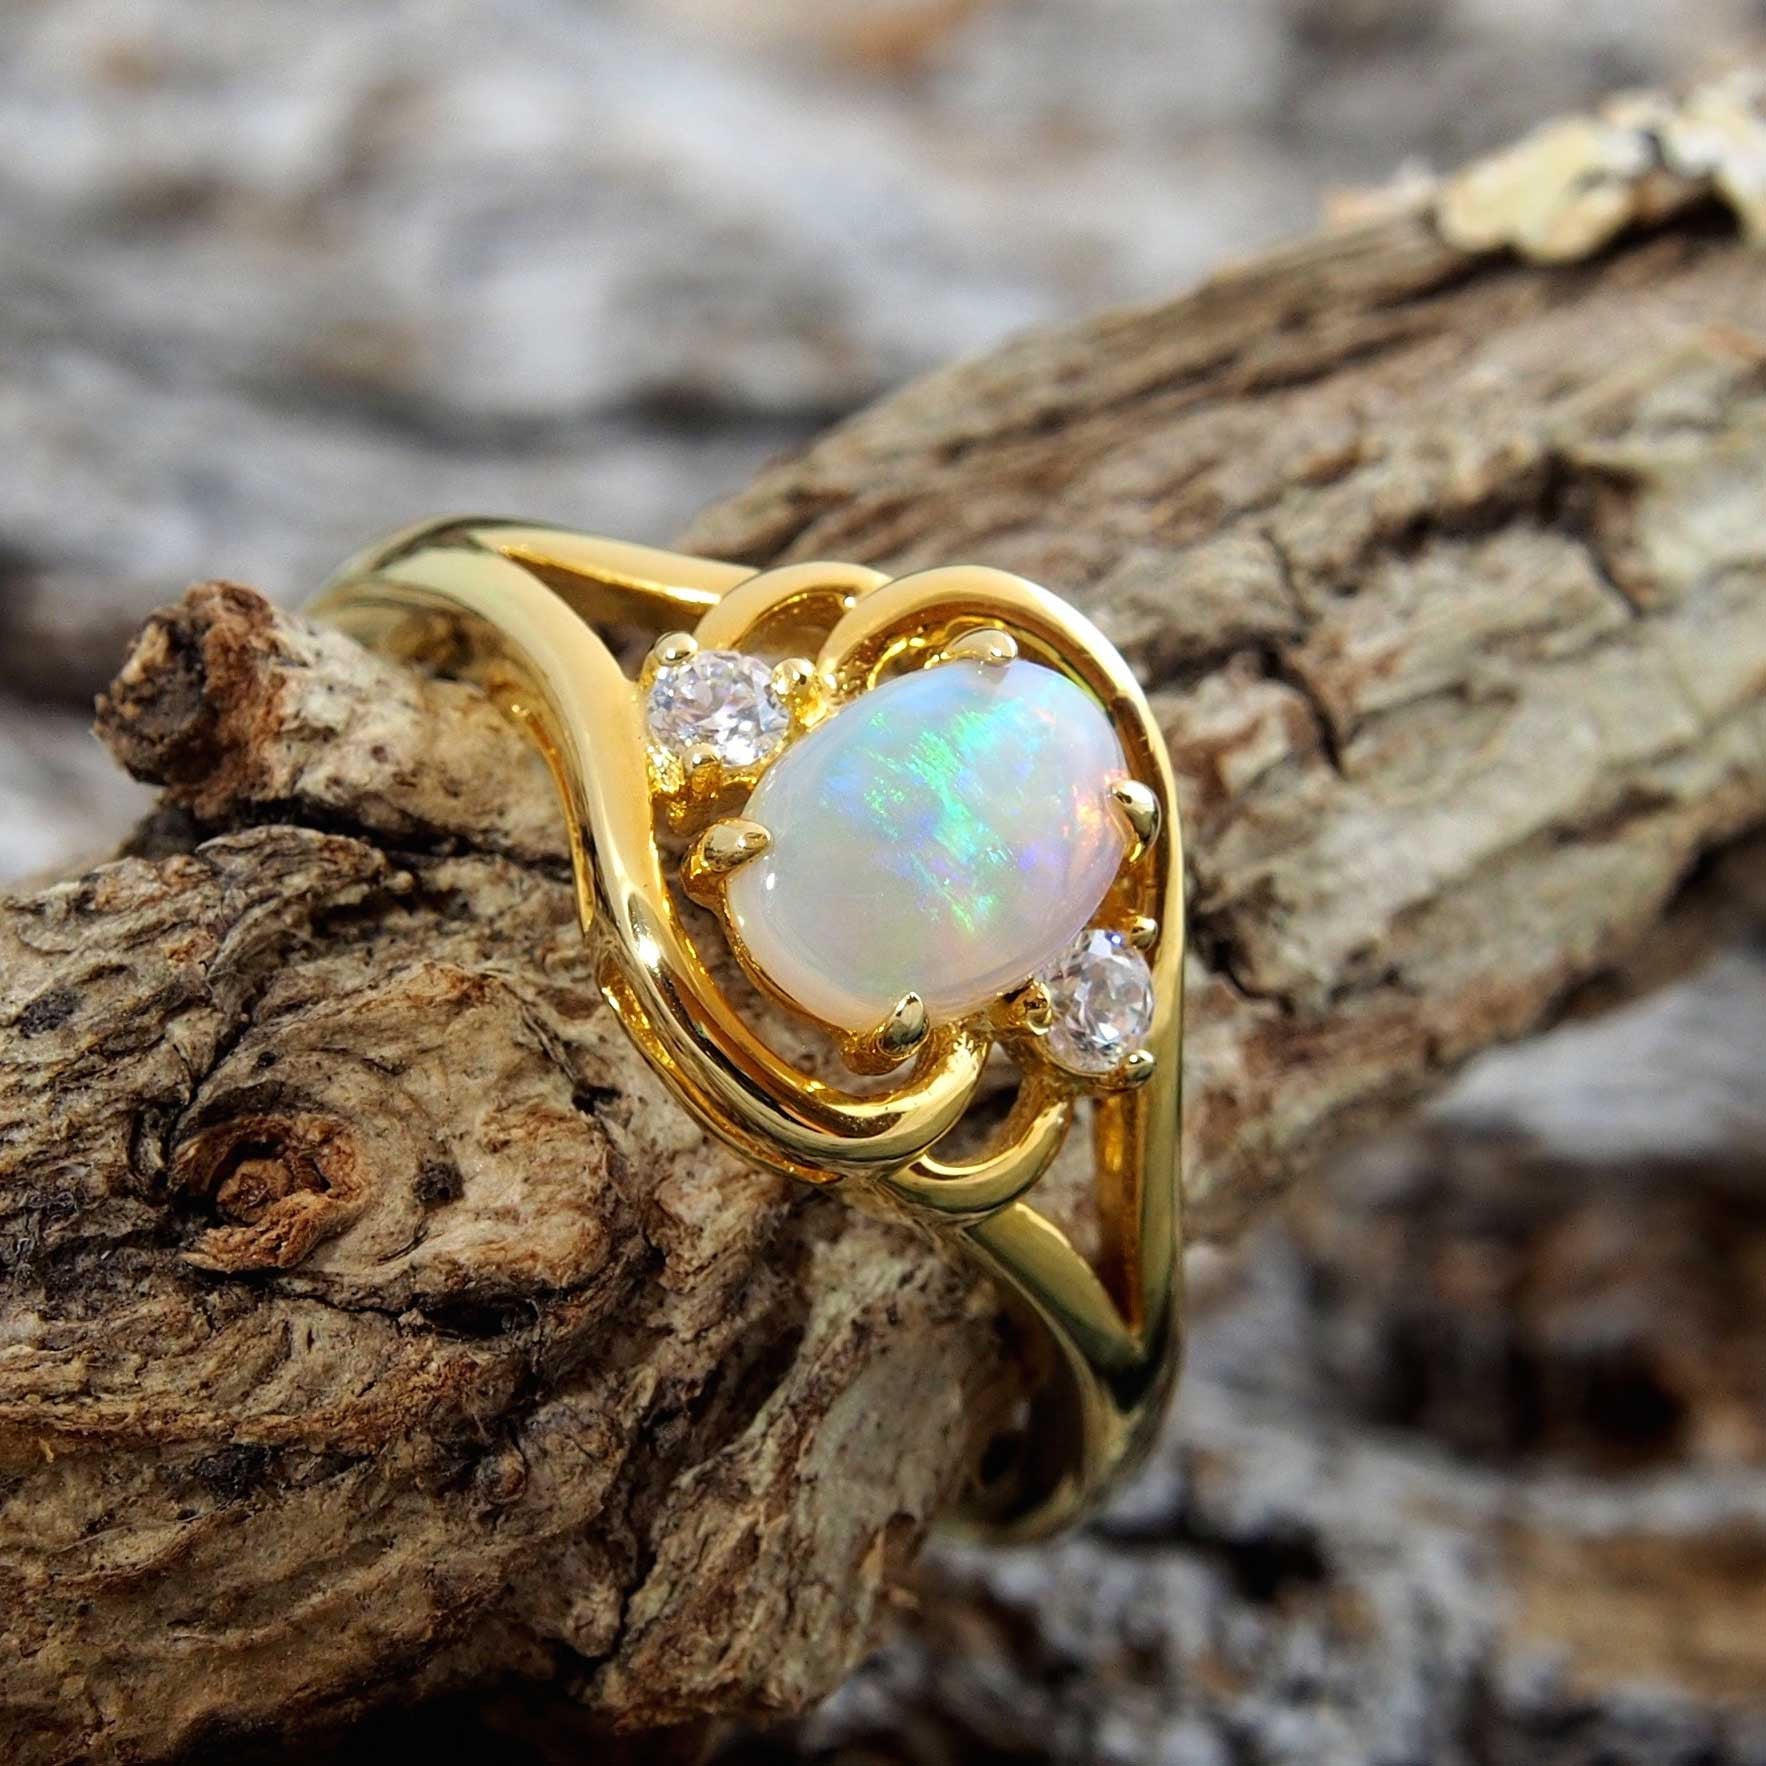 'Alenka' Crystal Opal Ring in Silver - Black Star Opal